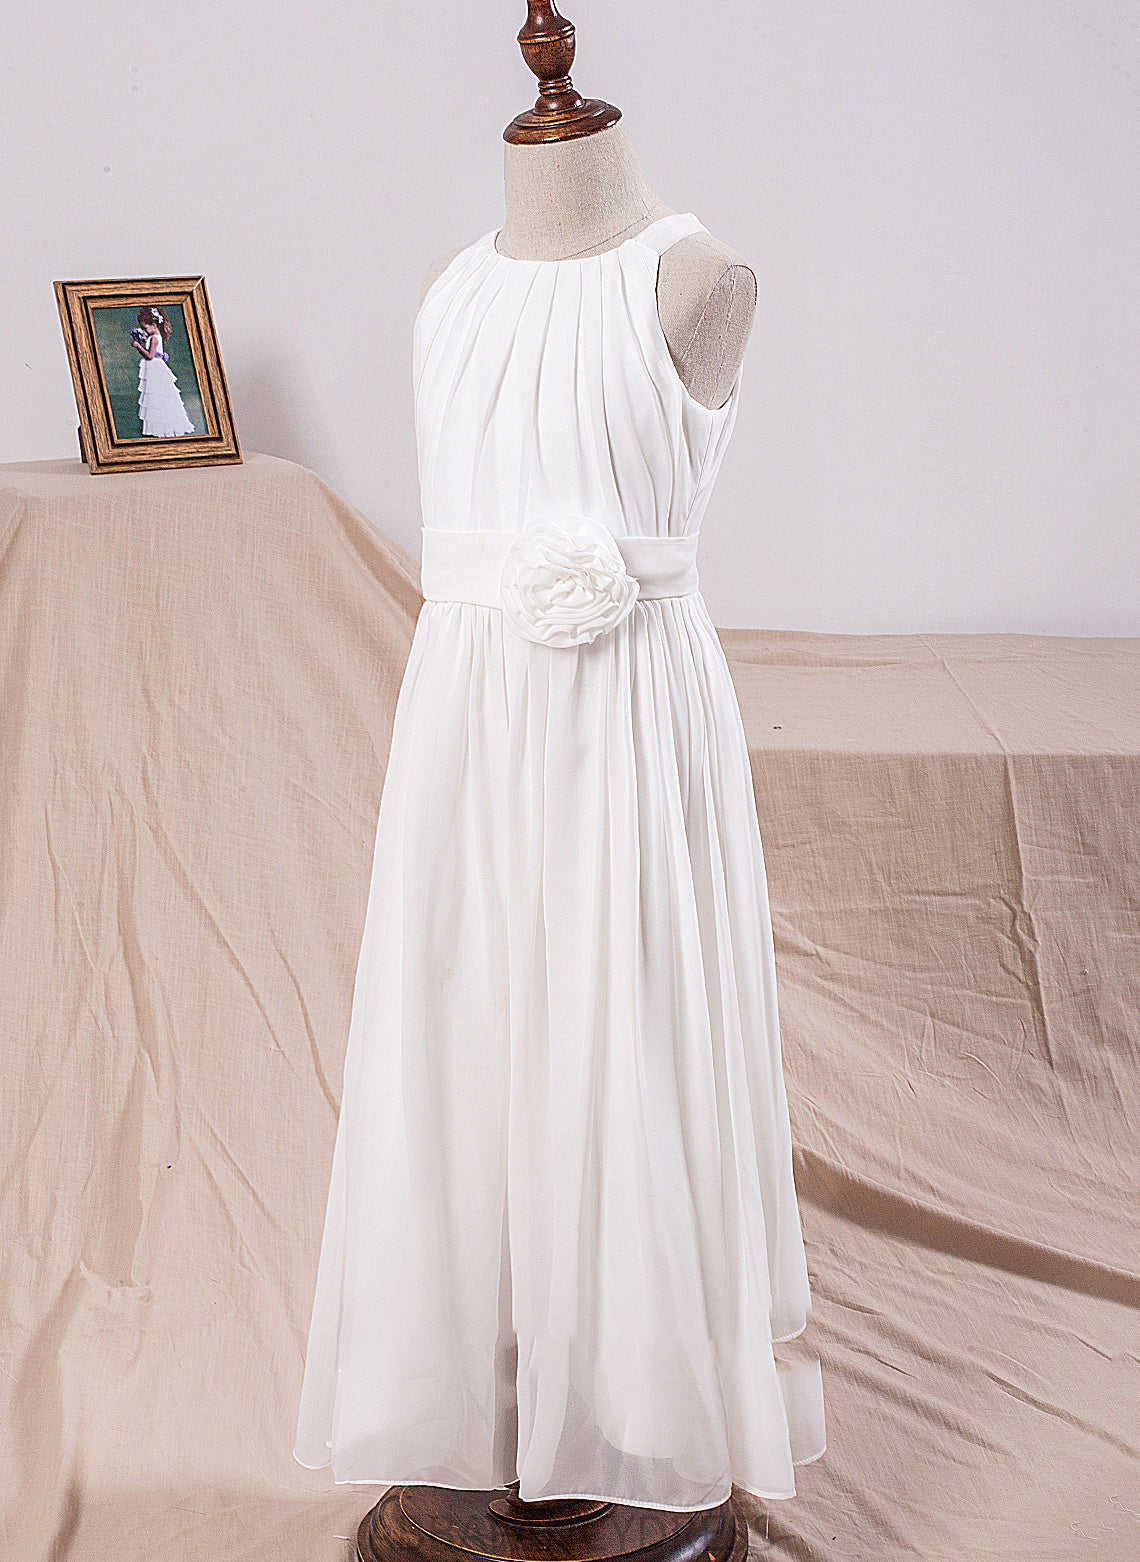 With A-Line Ankle-Length Scoop Junior Bridesmaid Dresses Flower(s) Neck Dominique Chiffon